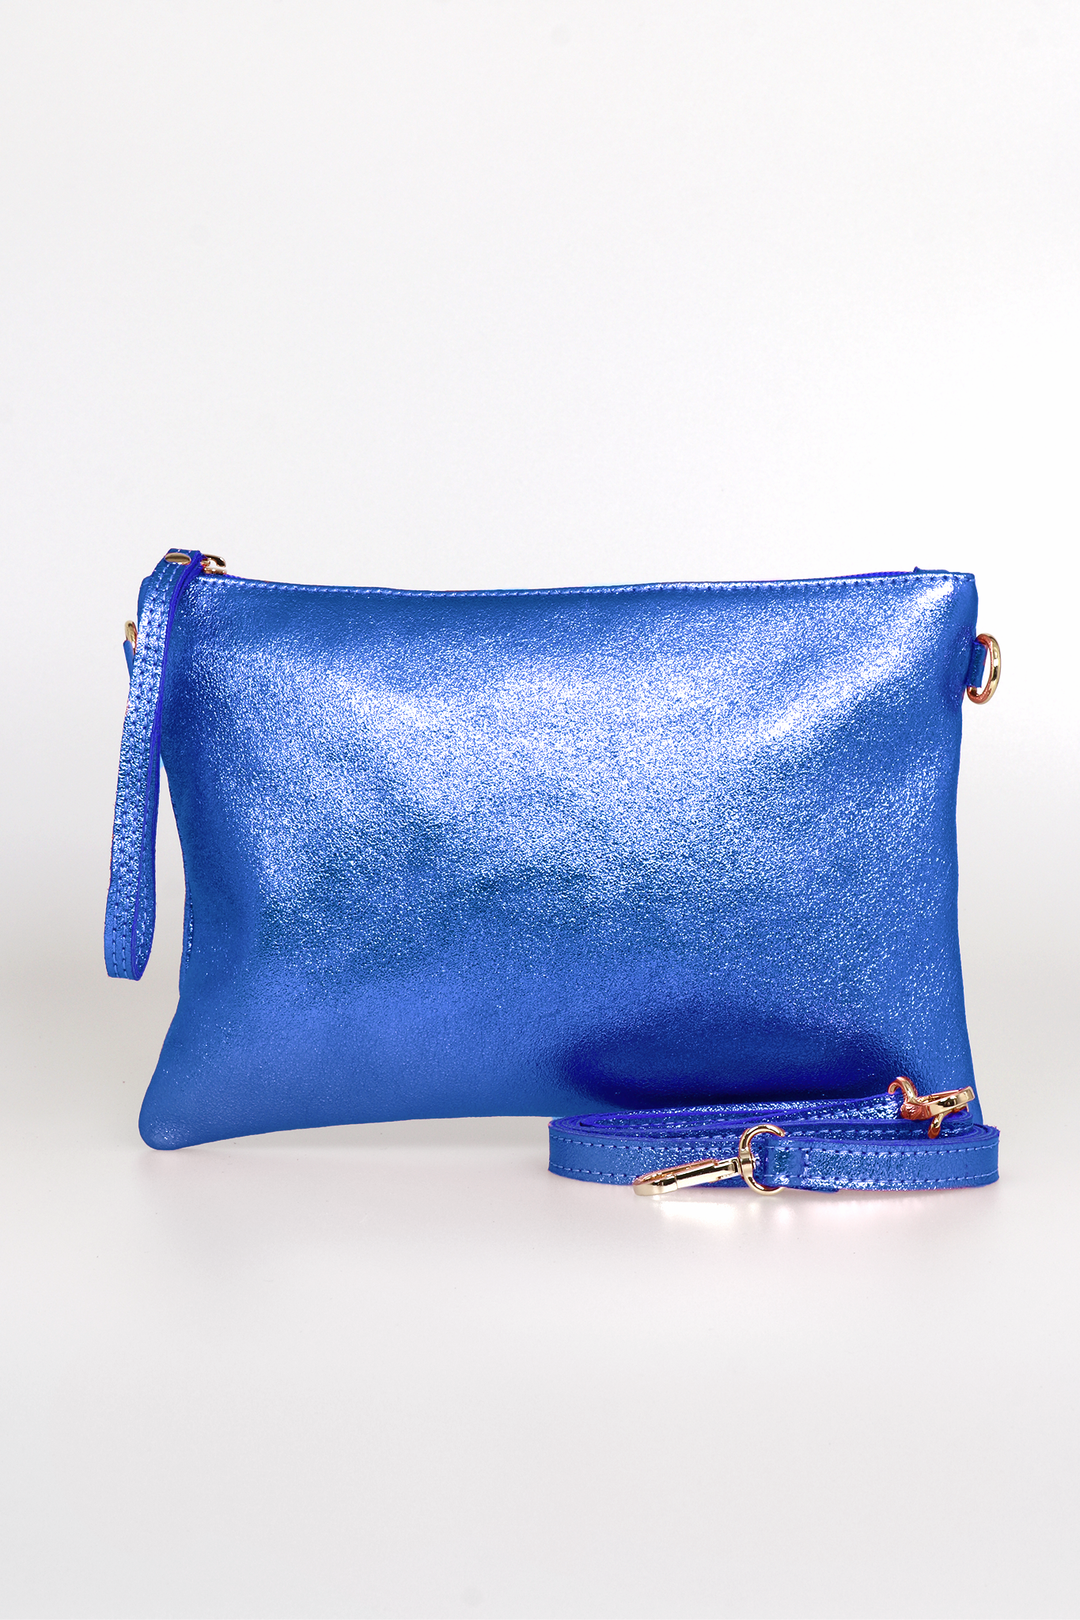 Metallic Royal Blue Large Leather Wristlet Clutch Bag